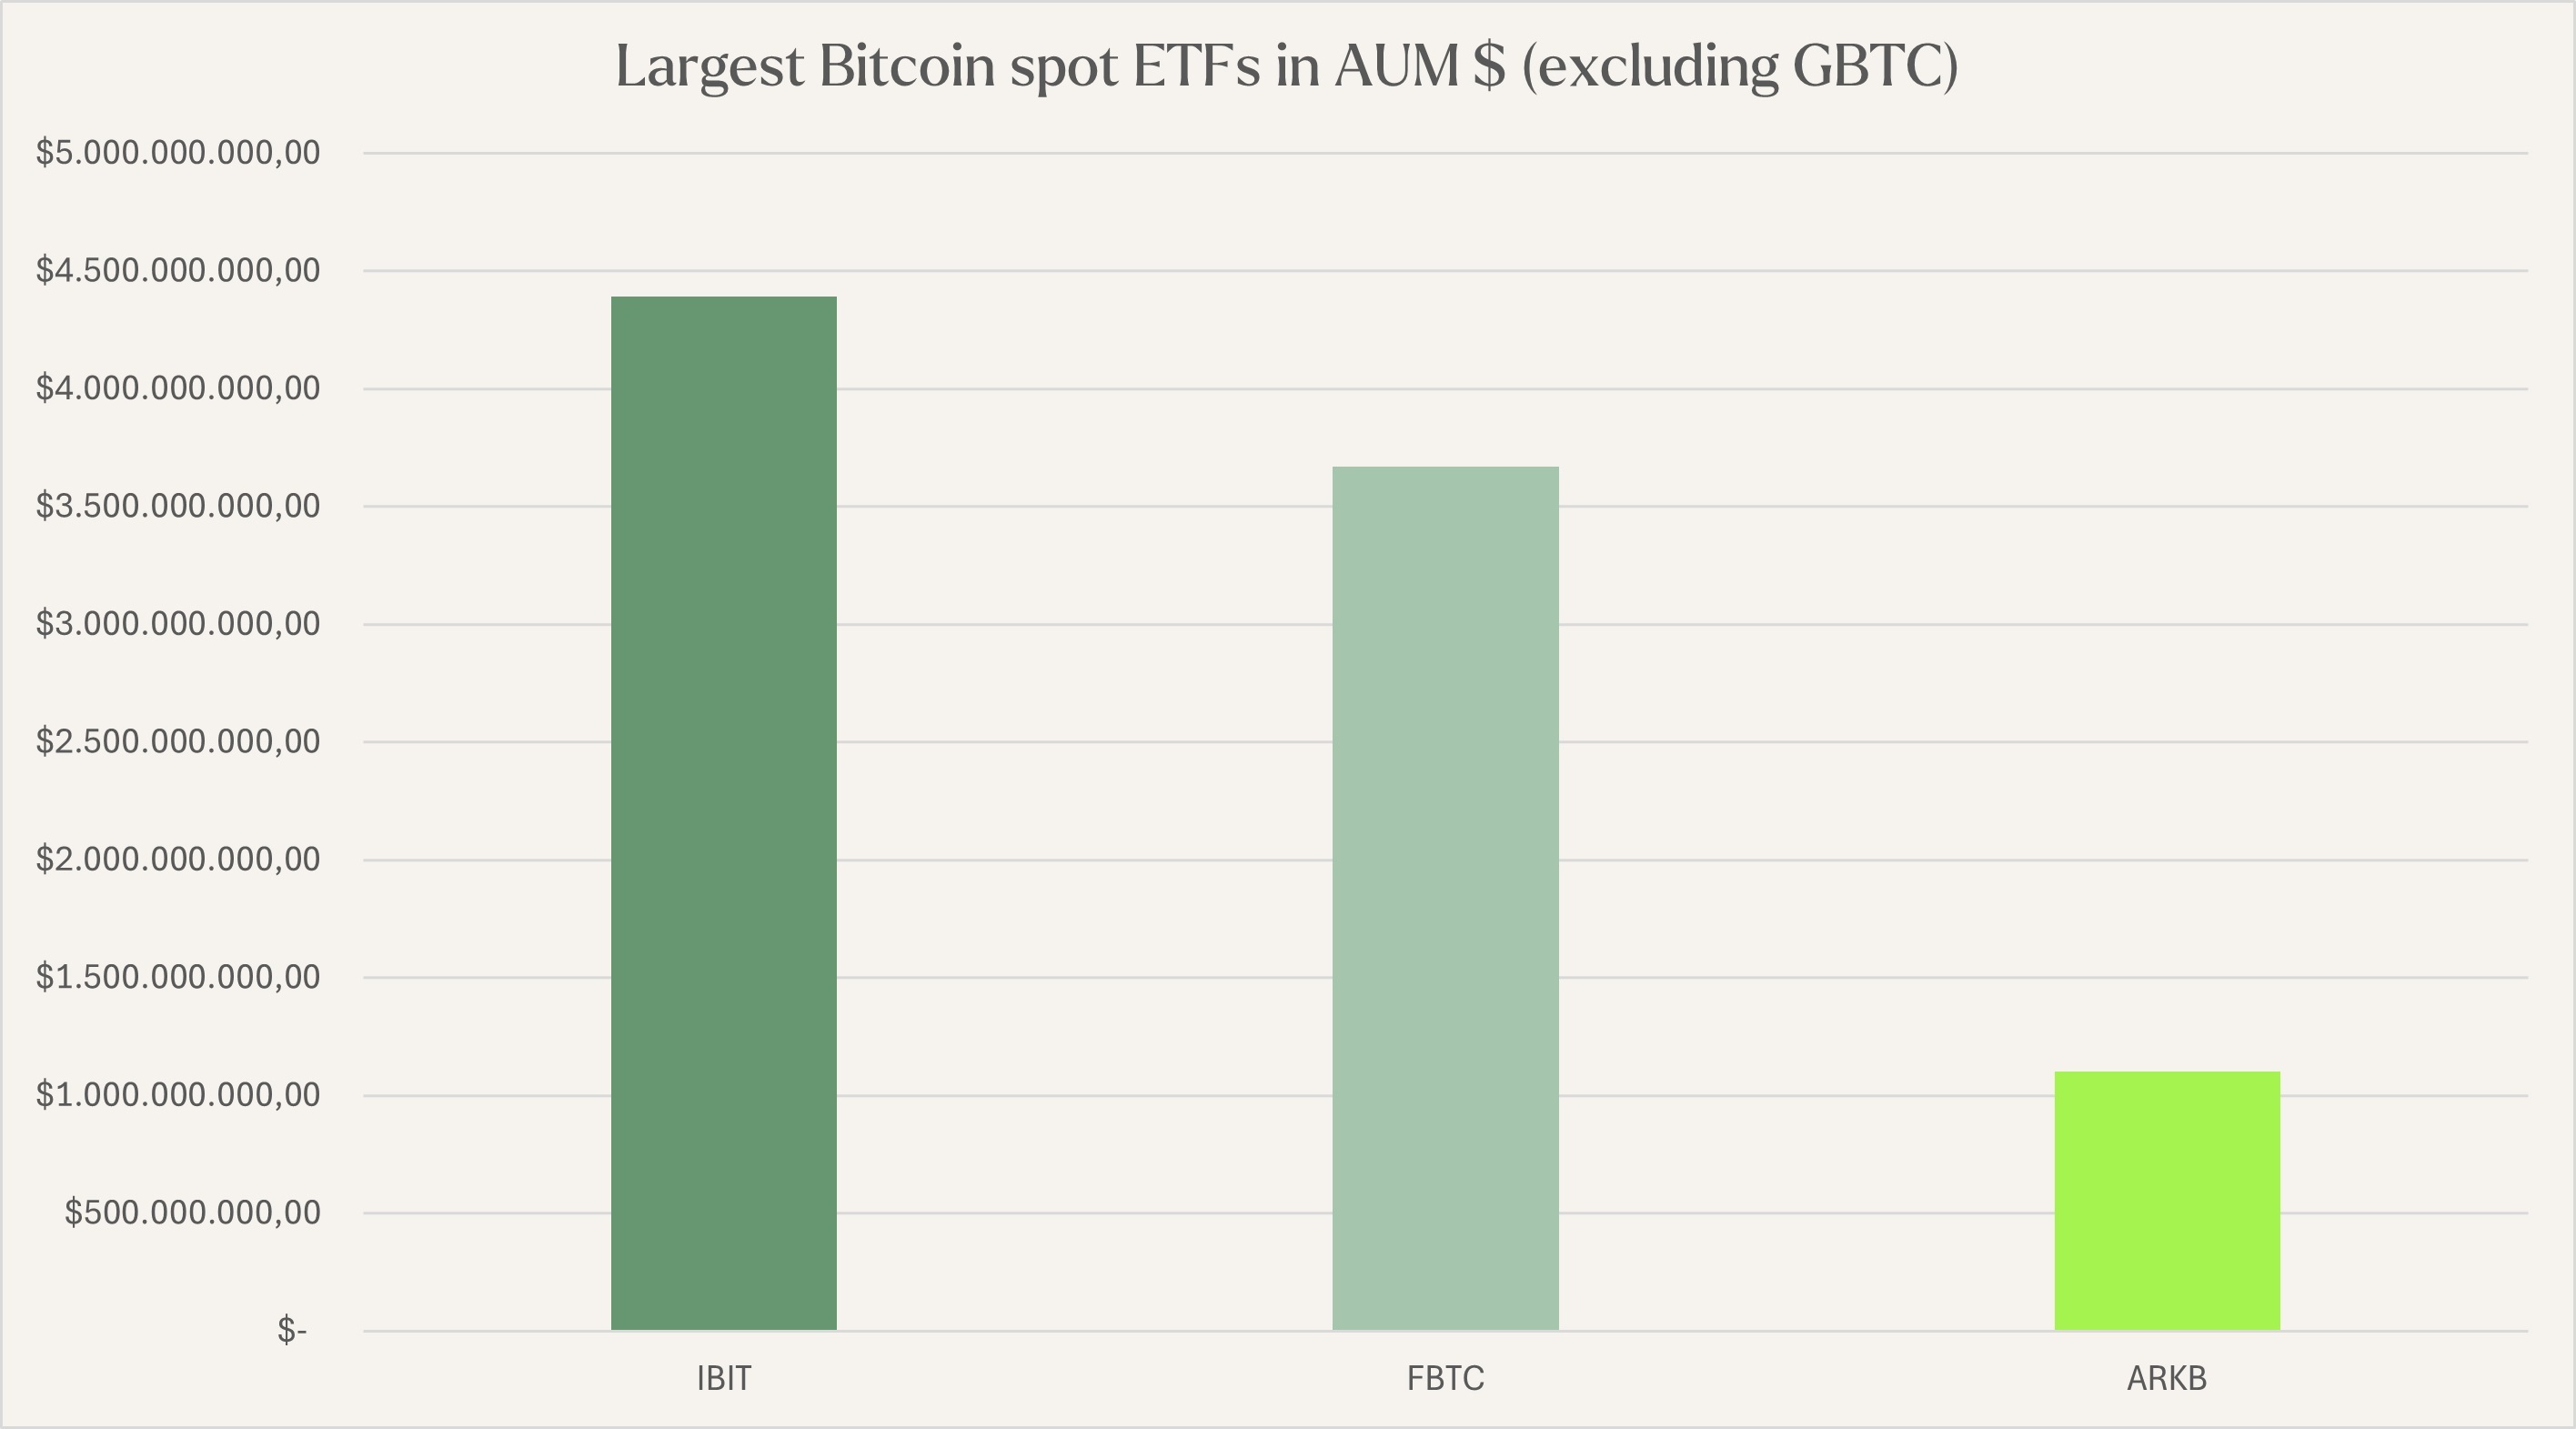 Largest Bitcoin spot ETFs in AUM, excluding GBTC